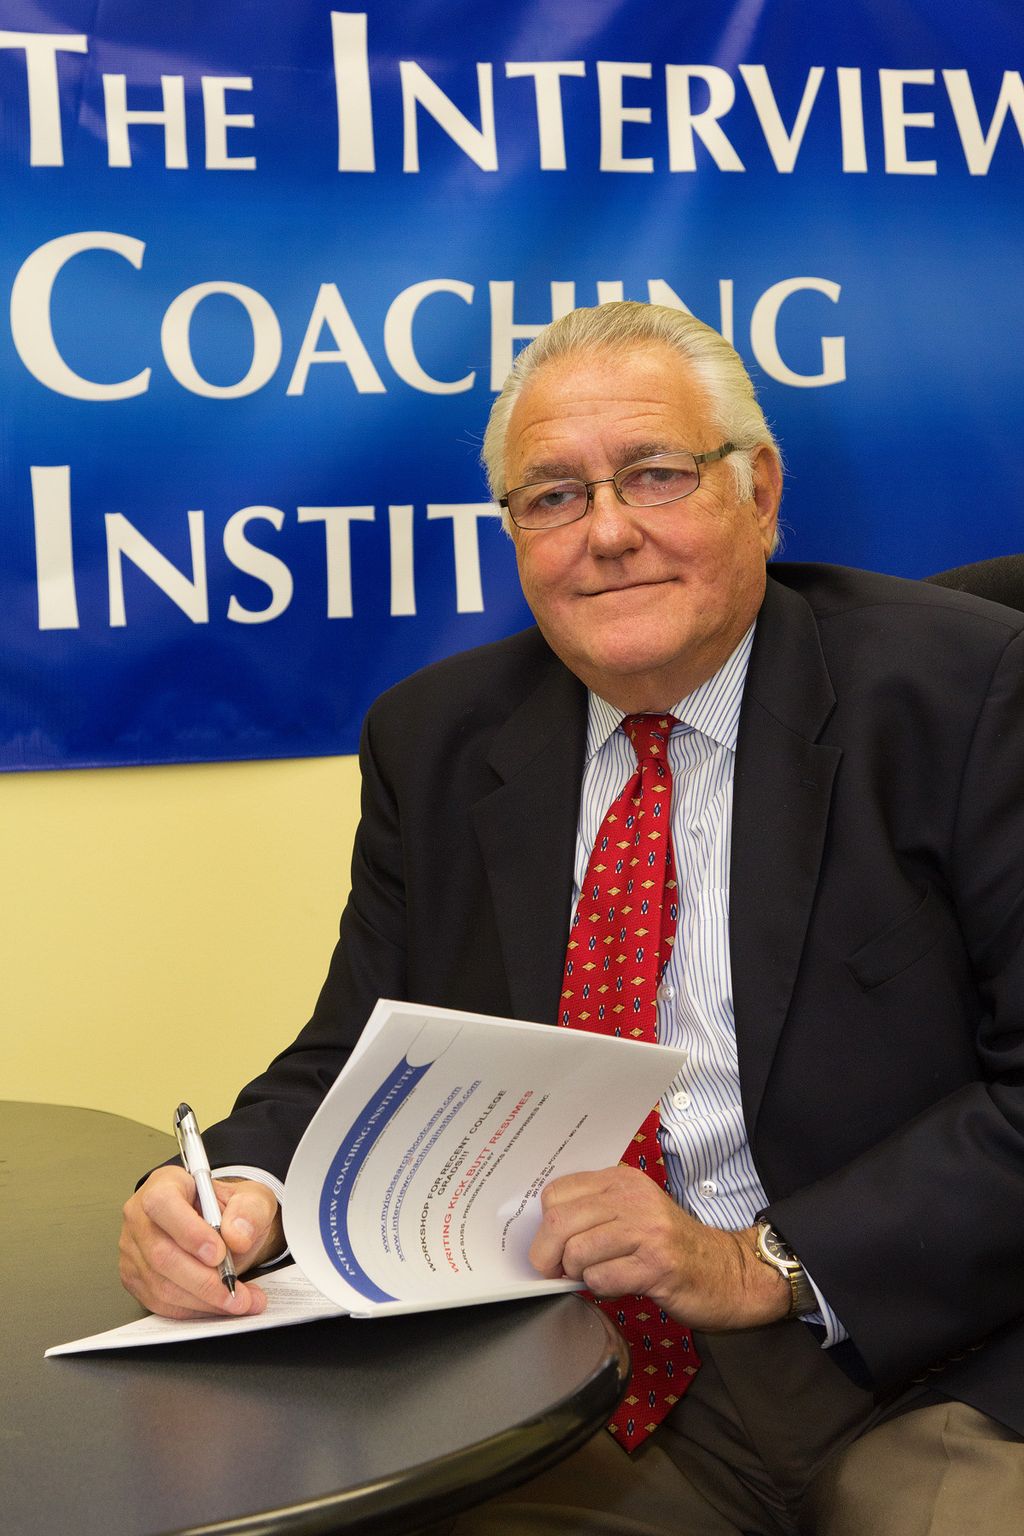 Interview Coaching Institute